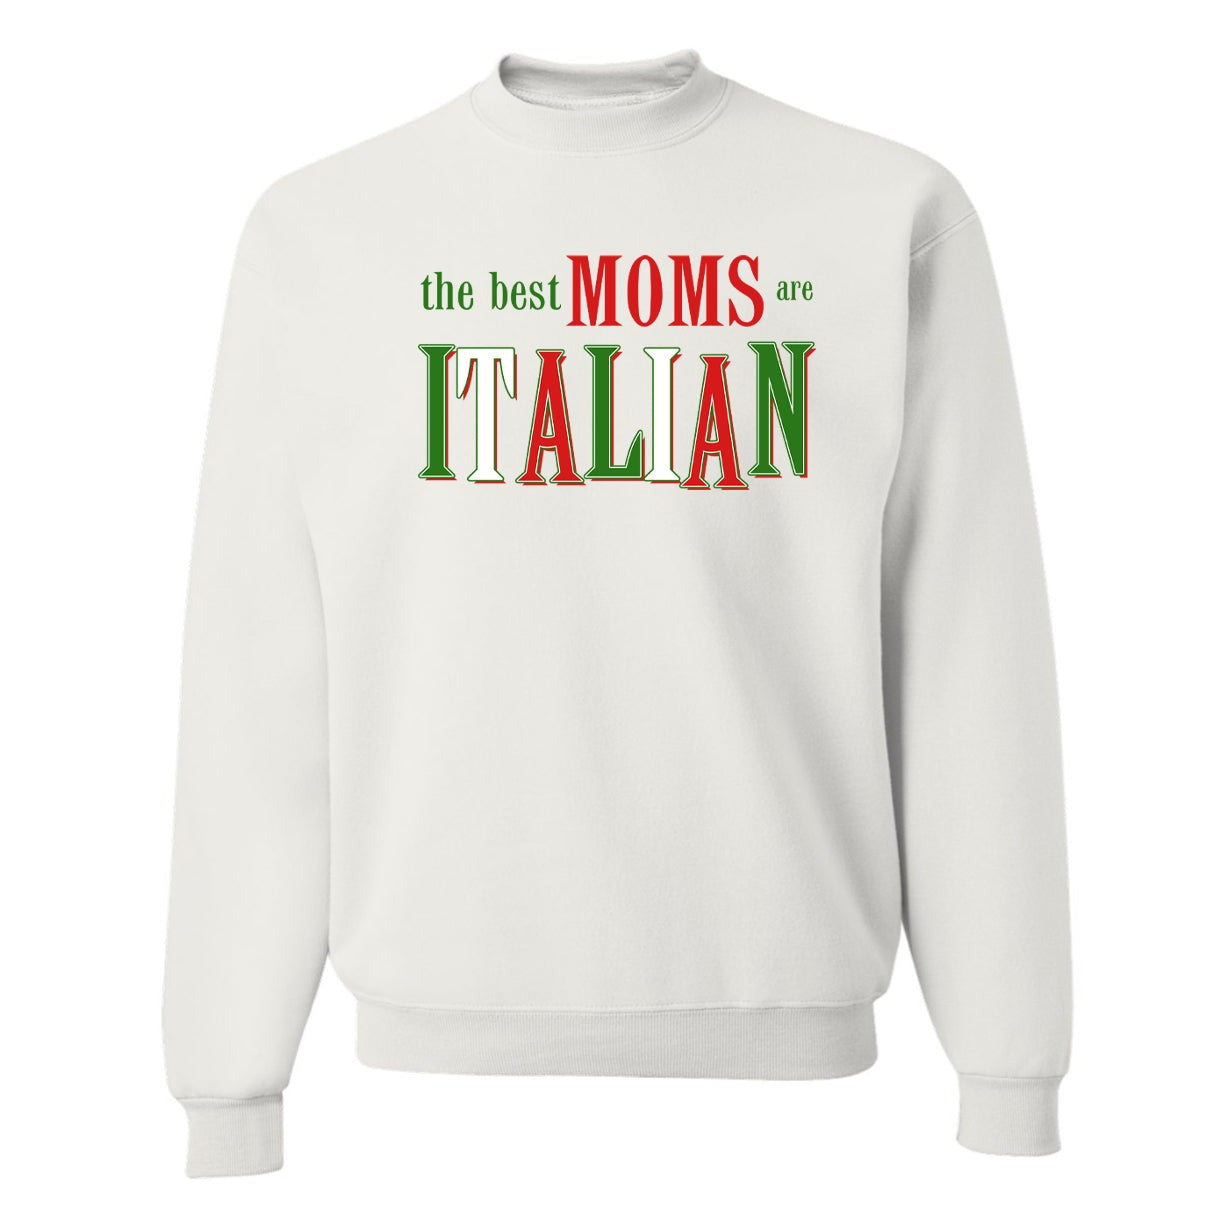 I Got A Guy Funny Italian Unisex Black T-Shirt – Hardcore Italians